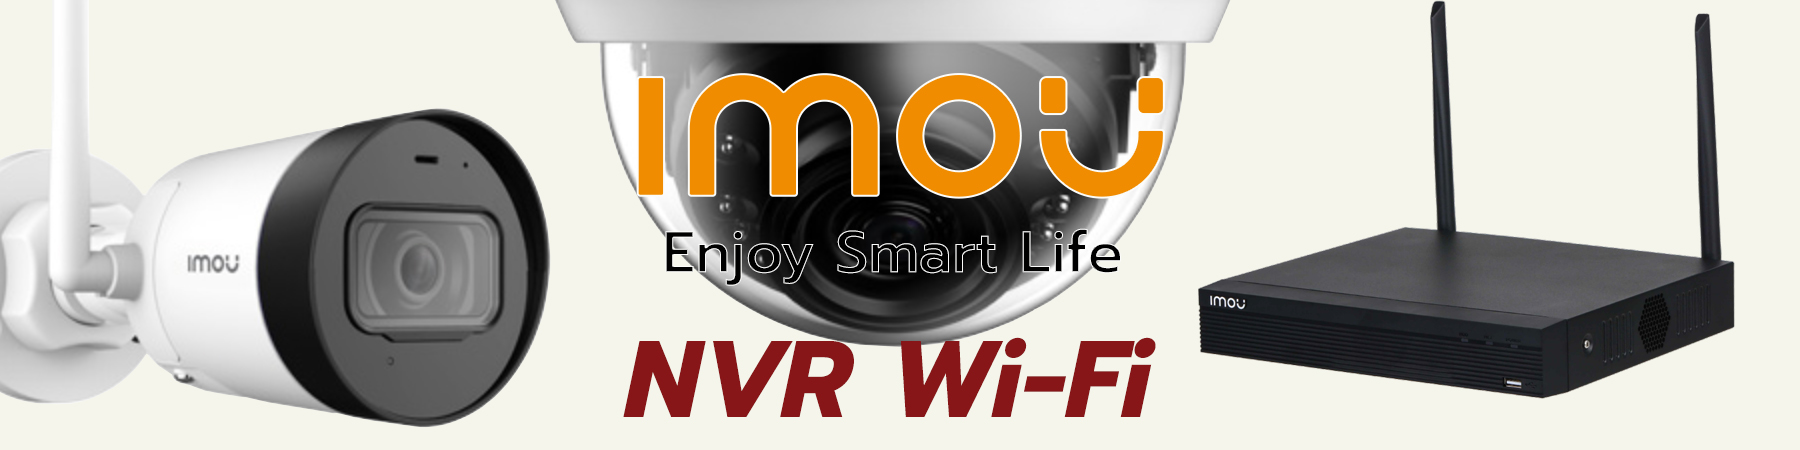 Wireless NVR,Imou NVR 4ch,Imou NVR 8ch,Imou Wi-Fi NVR 4ch,Imou Wi-Fi NVR 8ch,เครื่องบันทึก ไร้สาย Imou 4ช่อง,เครื่องบันทึก ไร้สาย Imou 8ช่อง